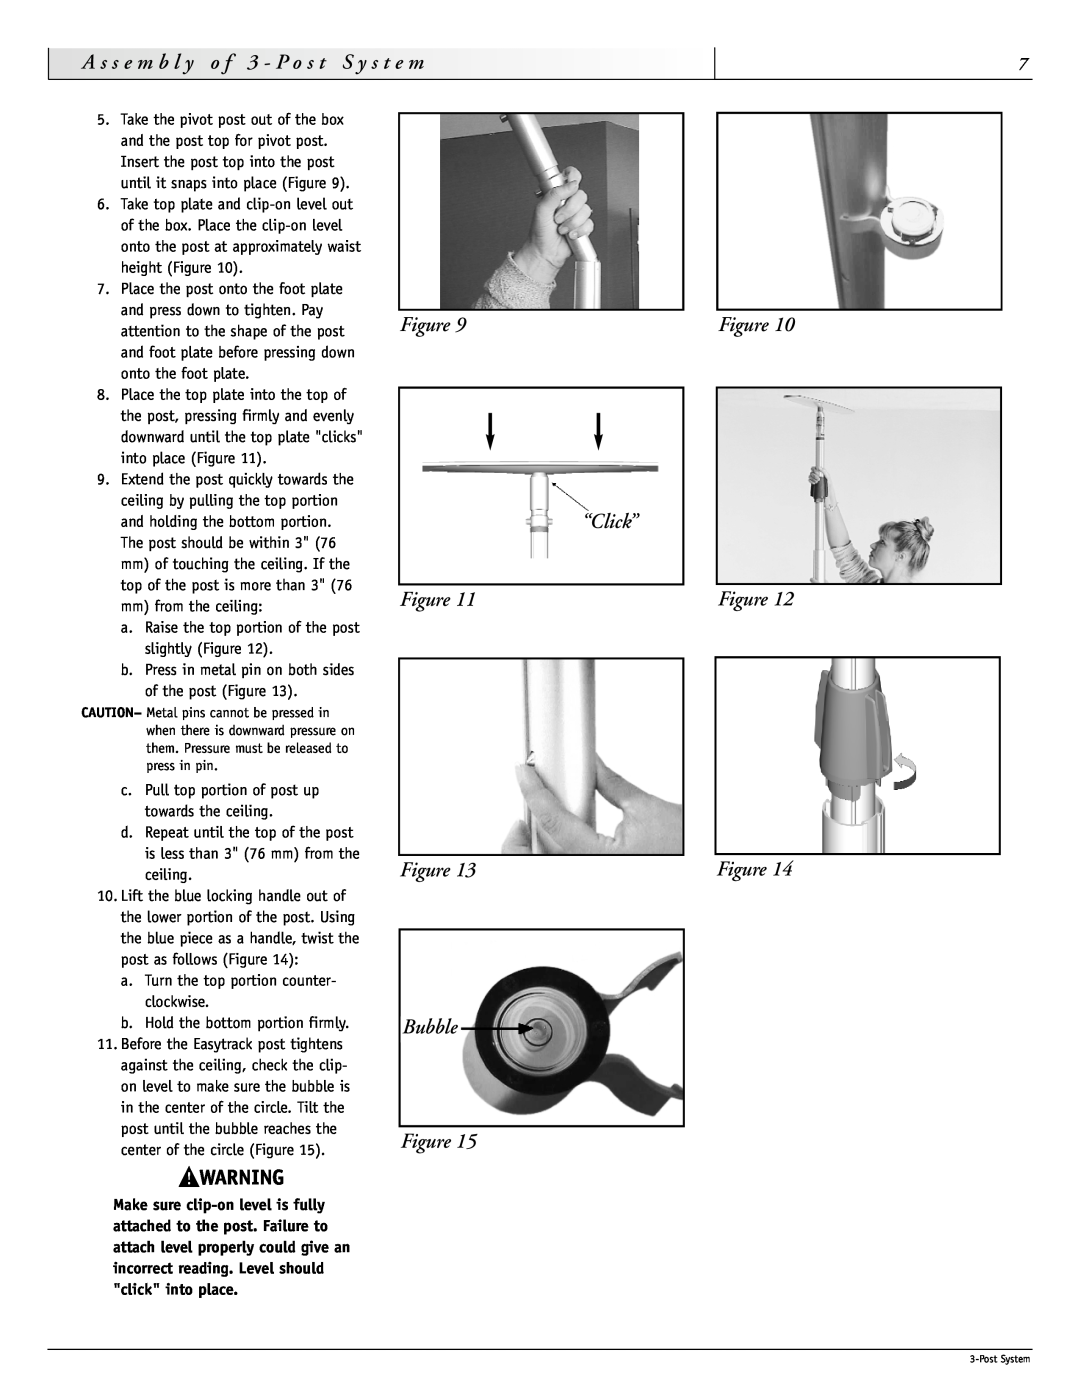 Sunrise Medical 93000 instruction manual “Click”, Bubble Figure 